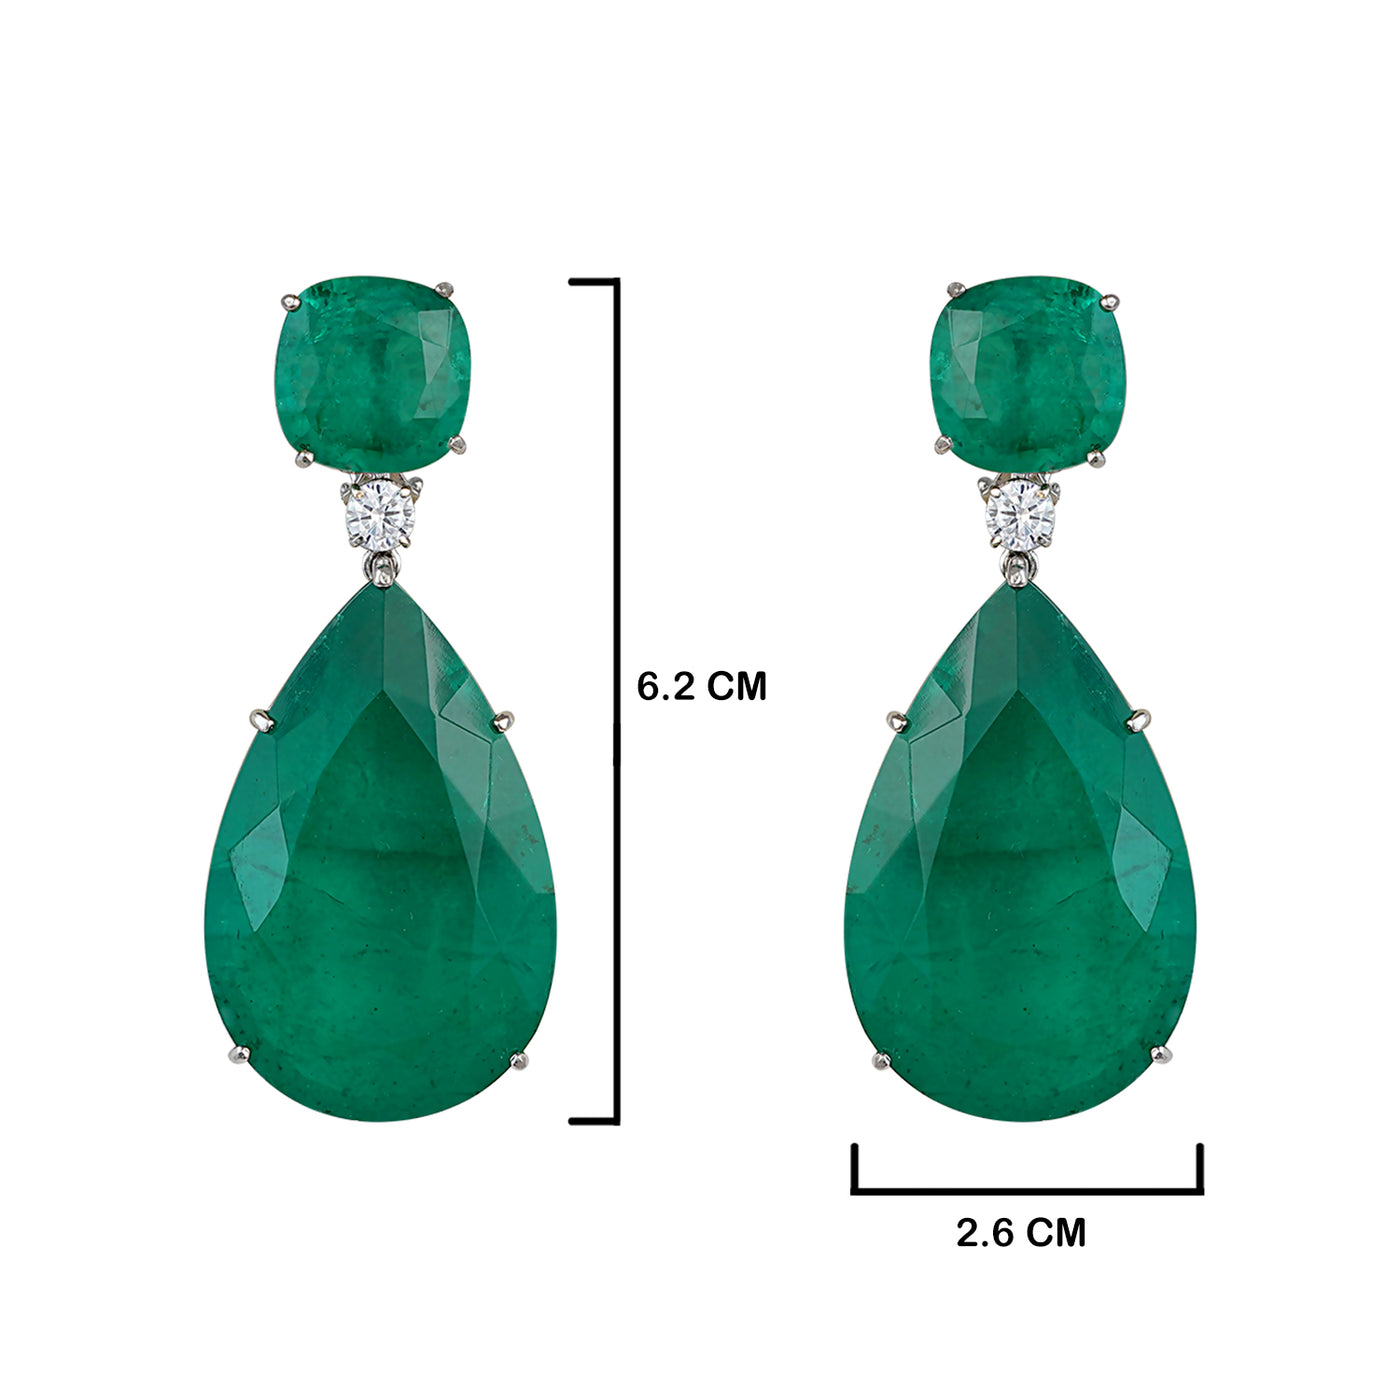 Cubic Zirconia Emerald Drop Earrings with Measurements in cm